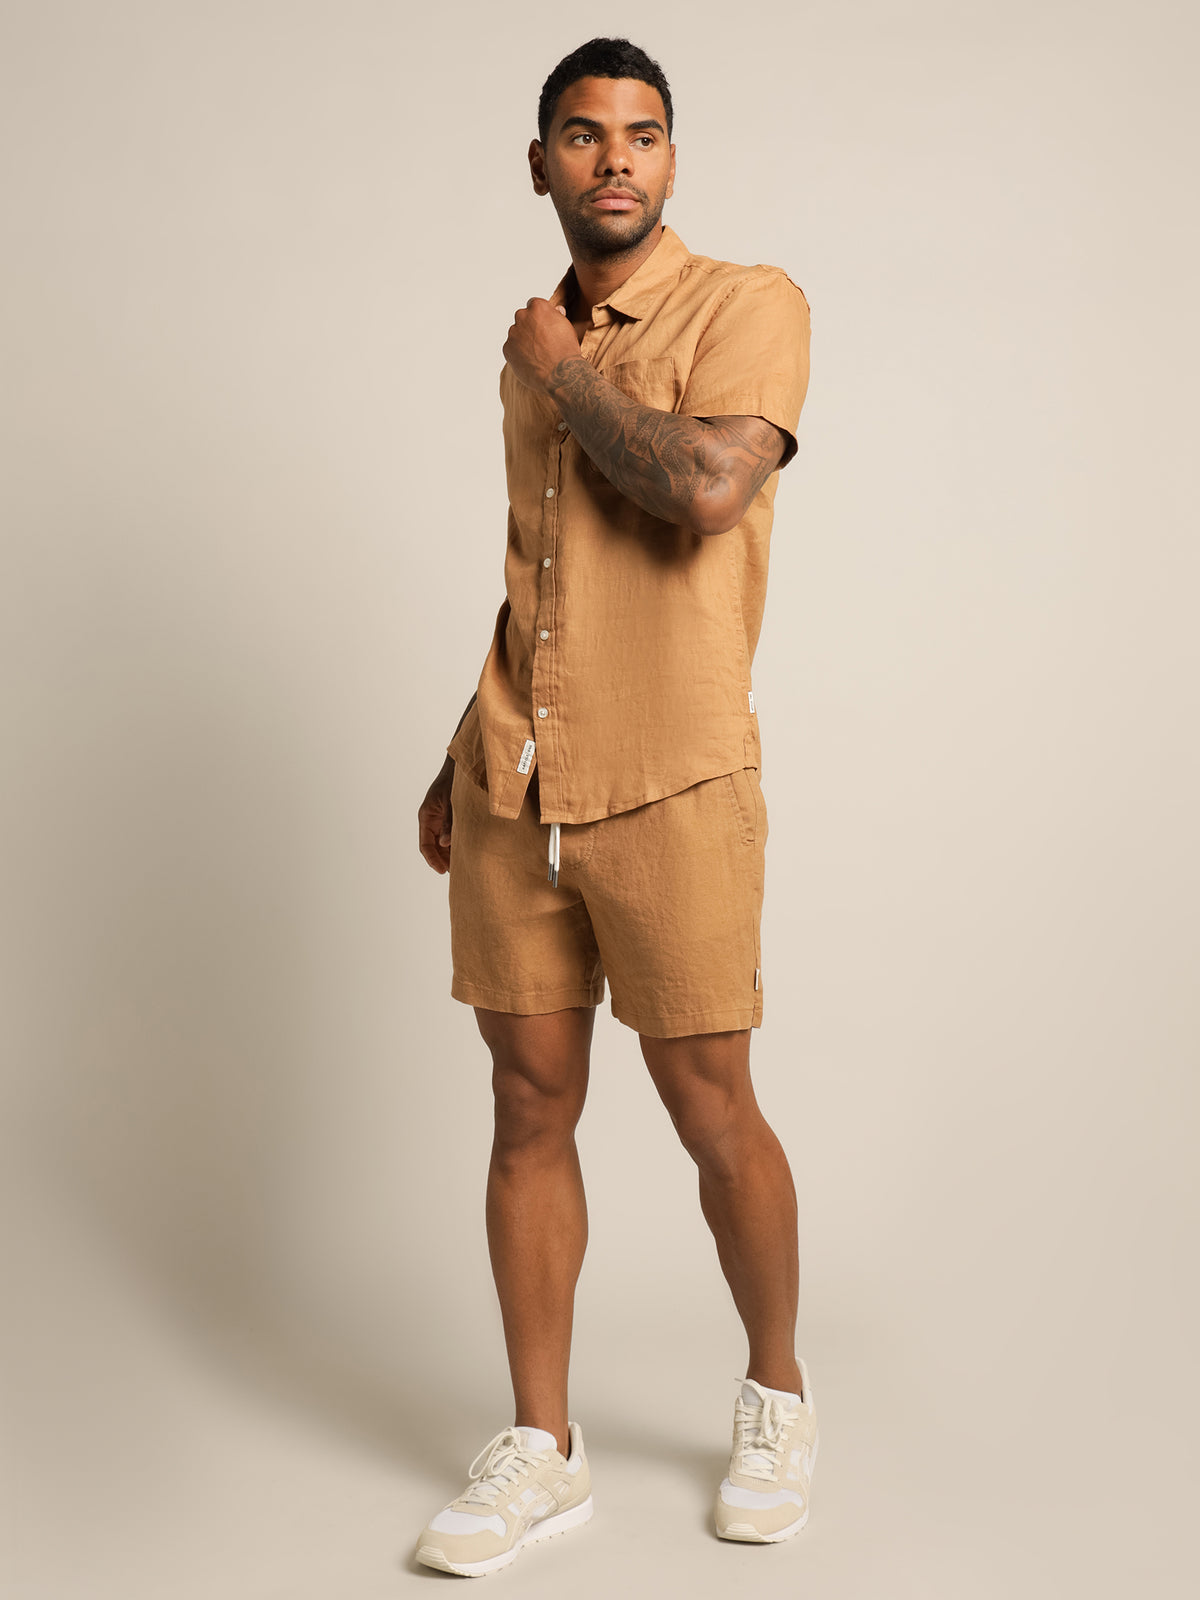 Nero Short Sleeve Linen Shirt in Caramel